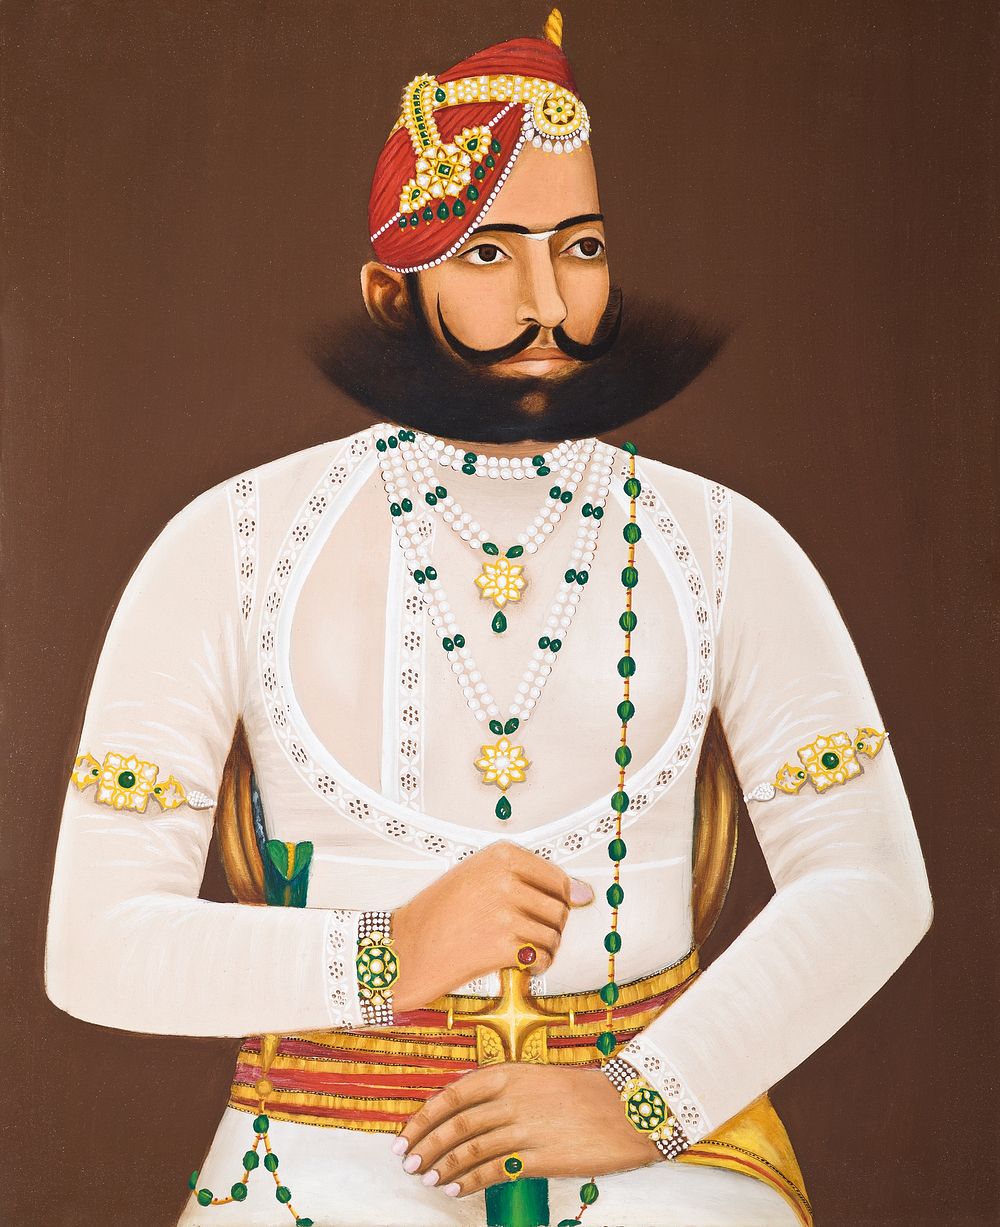 Kunwar Sabal Singh (1848-1881), vintage man illustration. Original public domain image from The Los Angeles County Museum of…